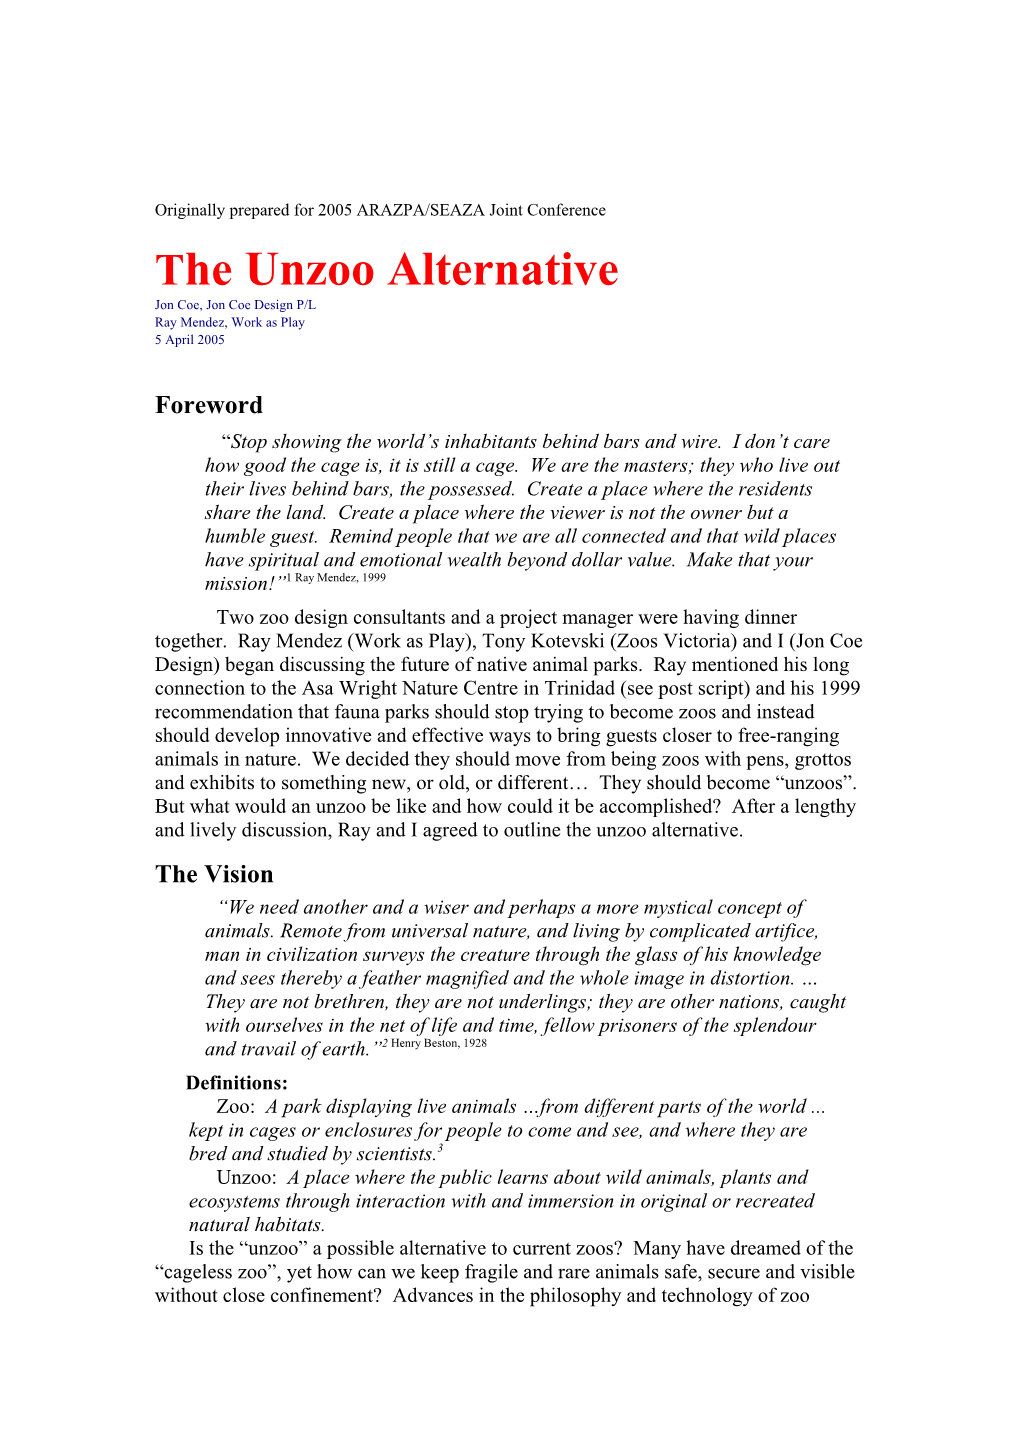 The Unzoo Alternative Jon Coe, Jon Coe Design P/L Ray Mendez, Work As Play 5 April 2005